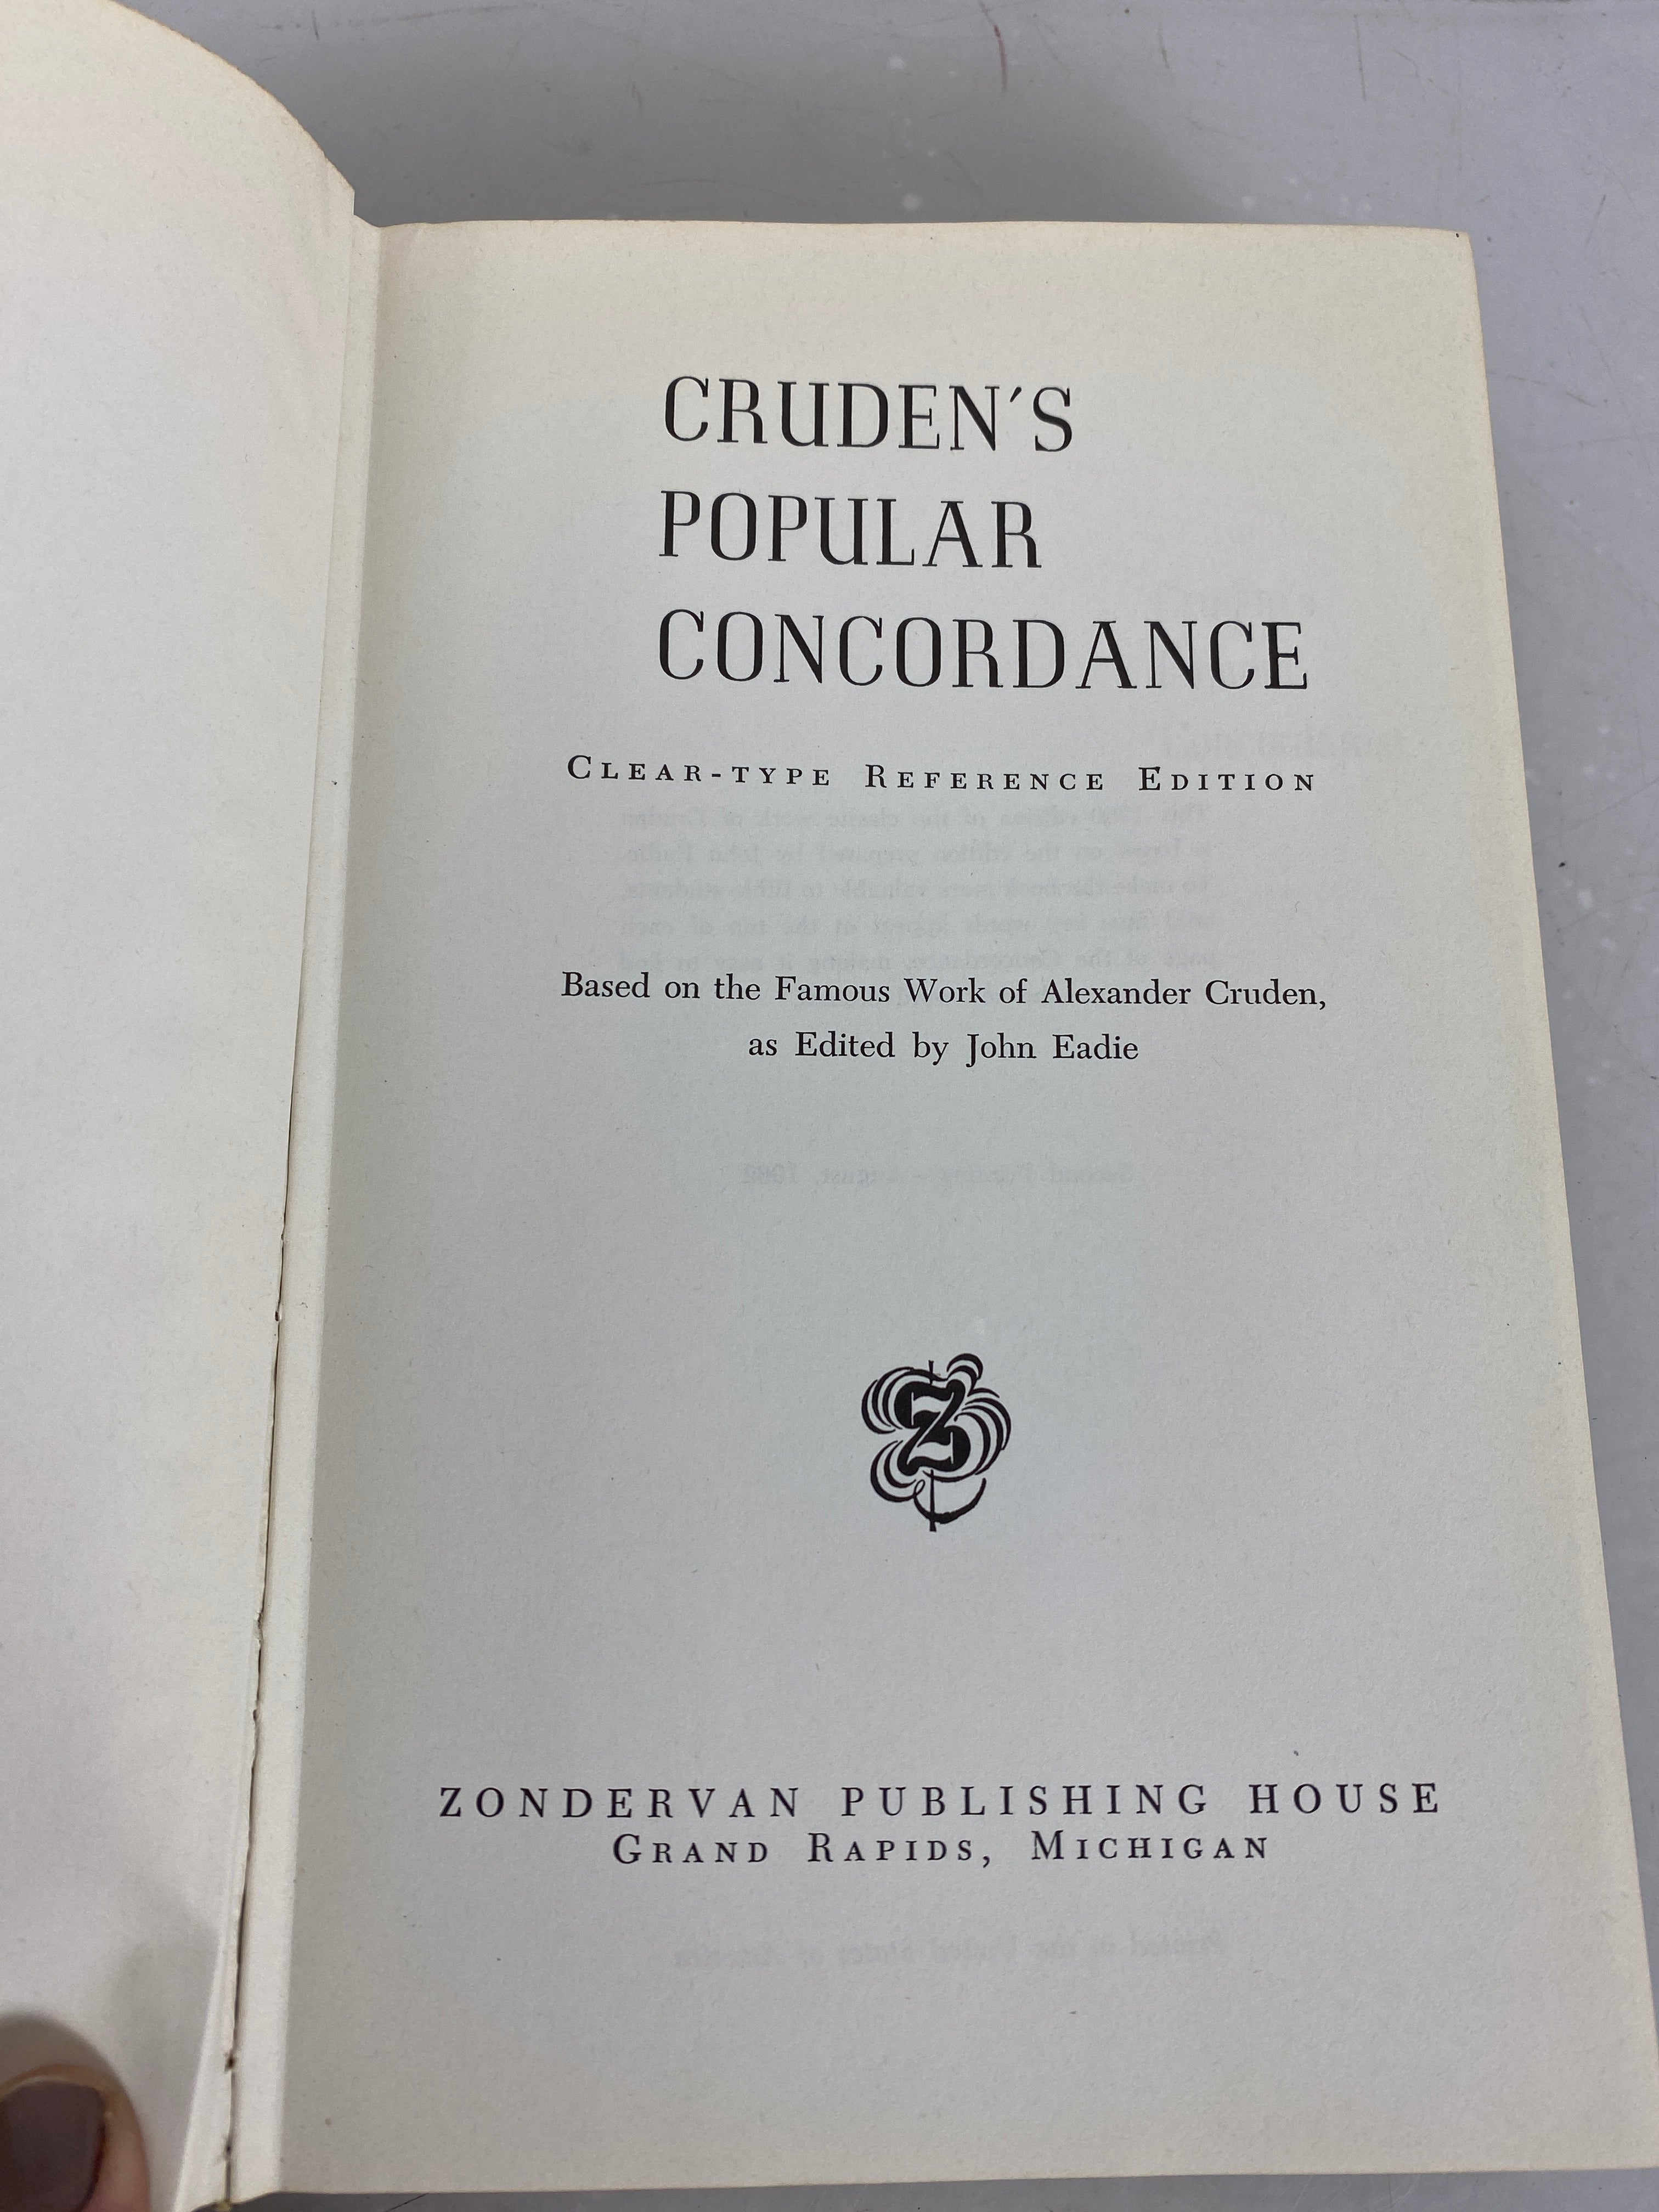 Cruden's Popular Concordance Zondervan Publishing 1962 Second Printing HC DJ